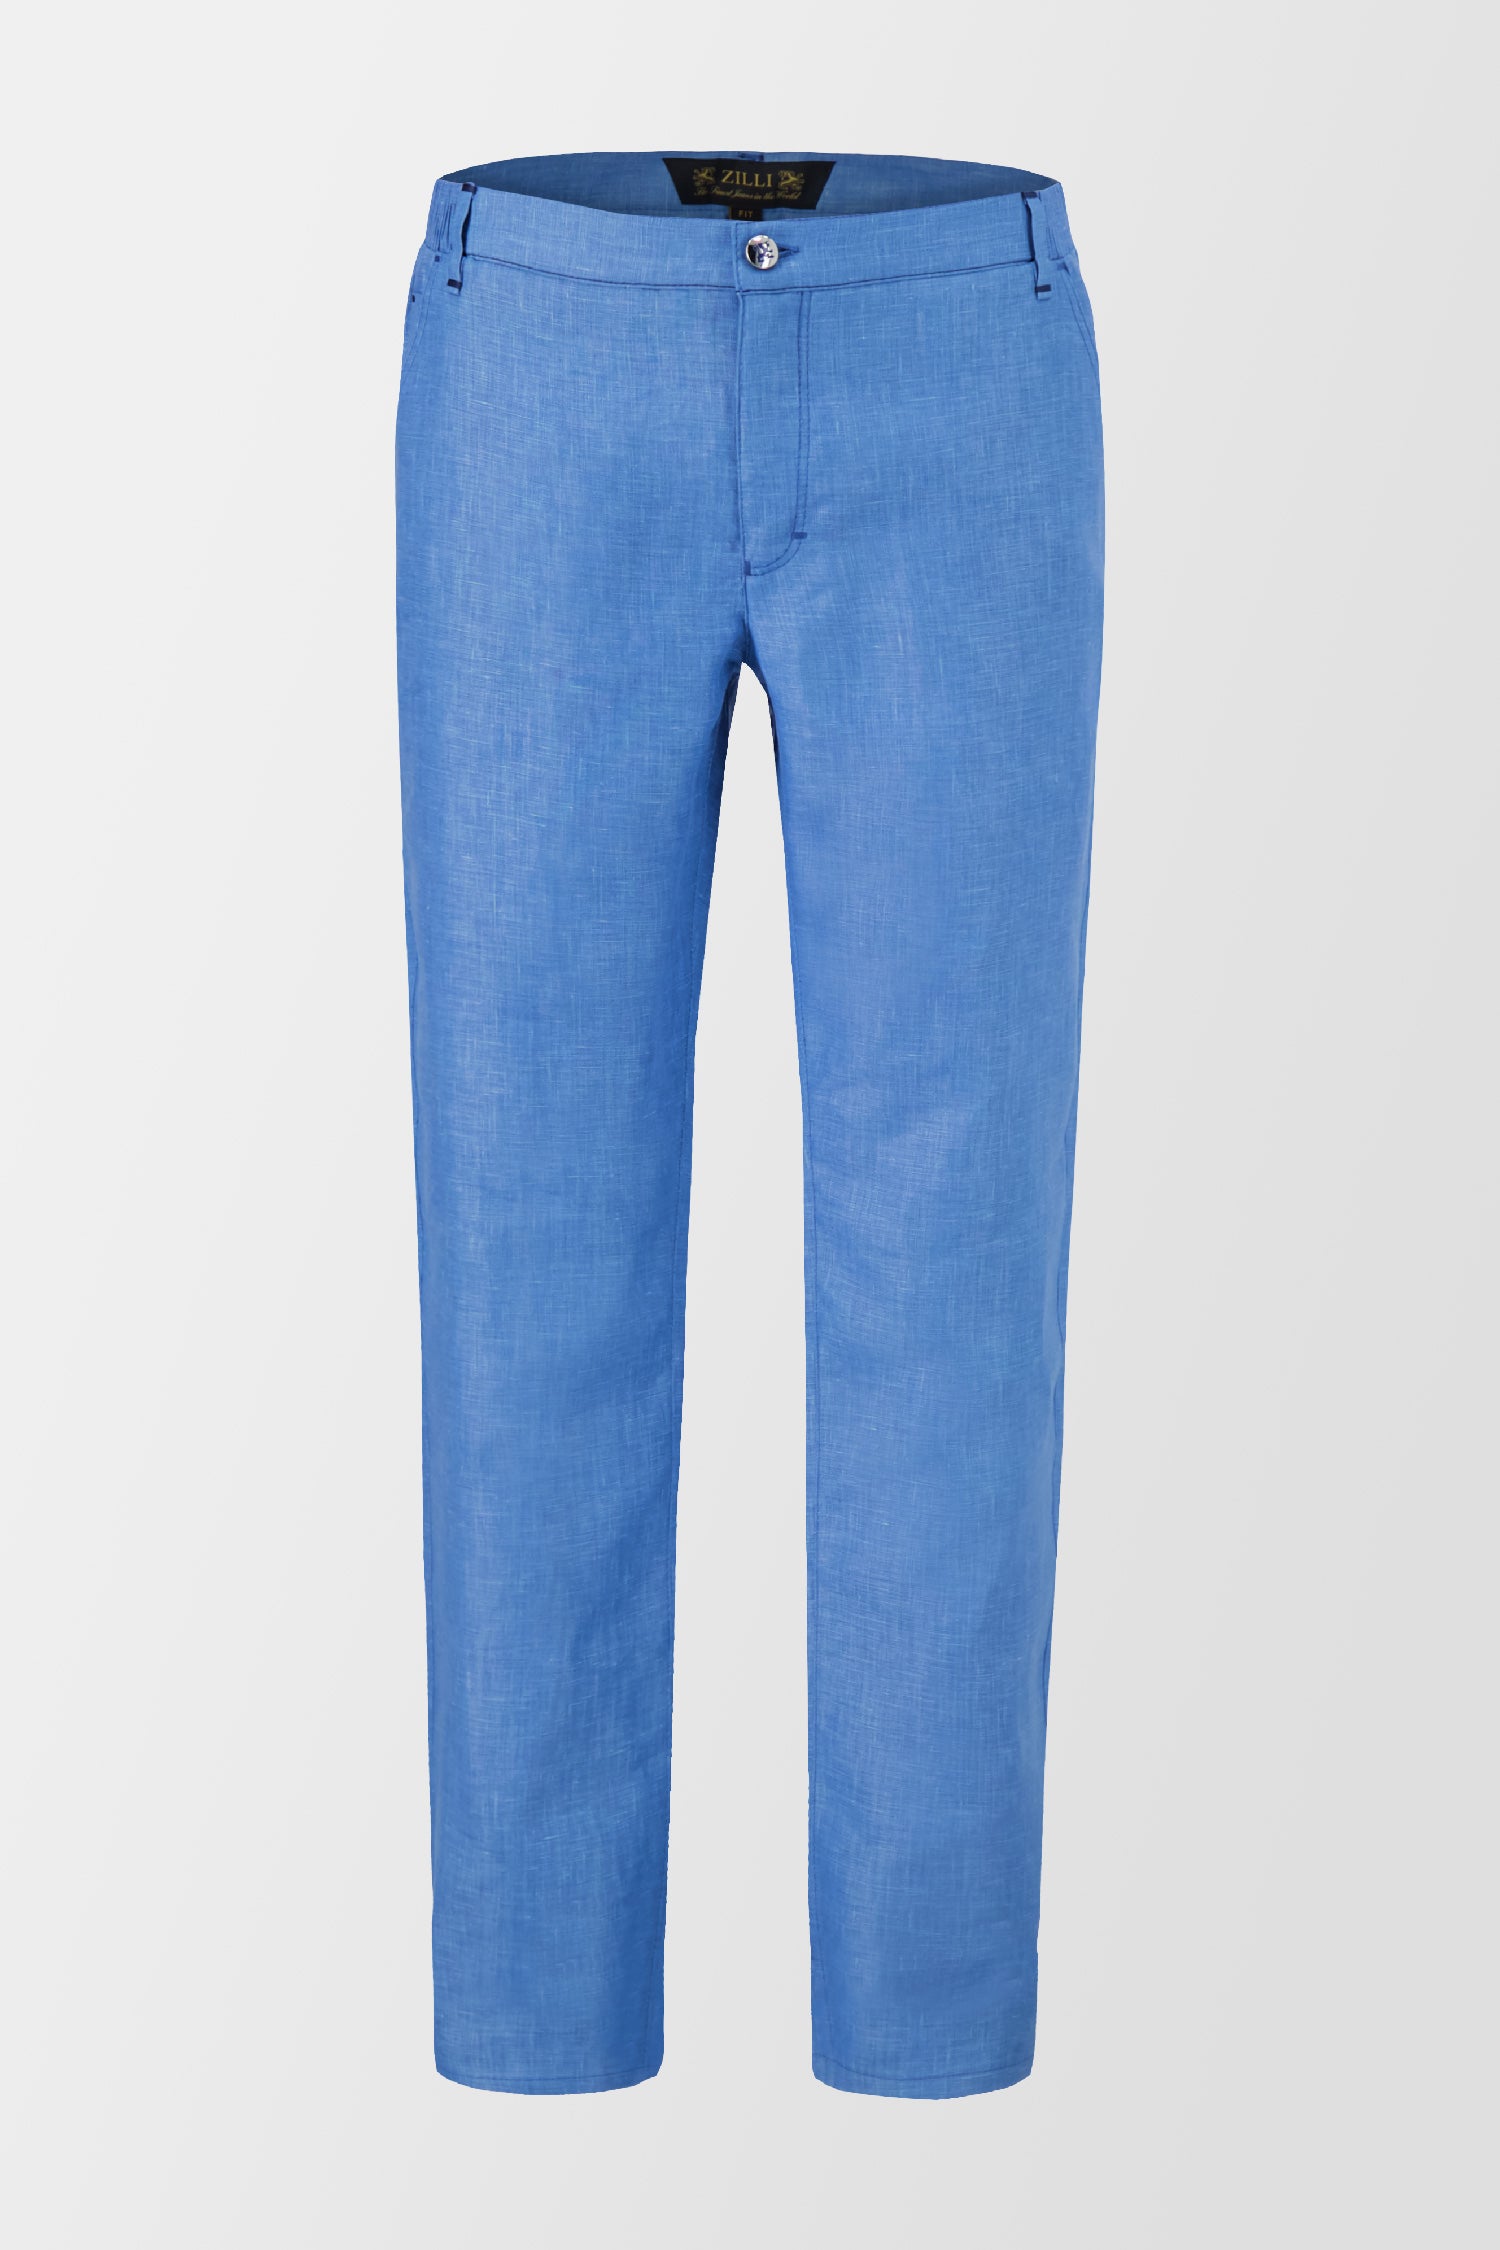 Zilli Blue Linen Trousers